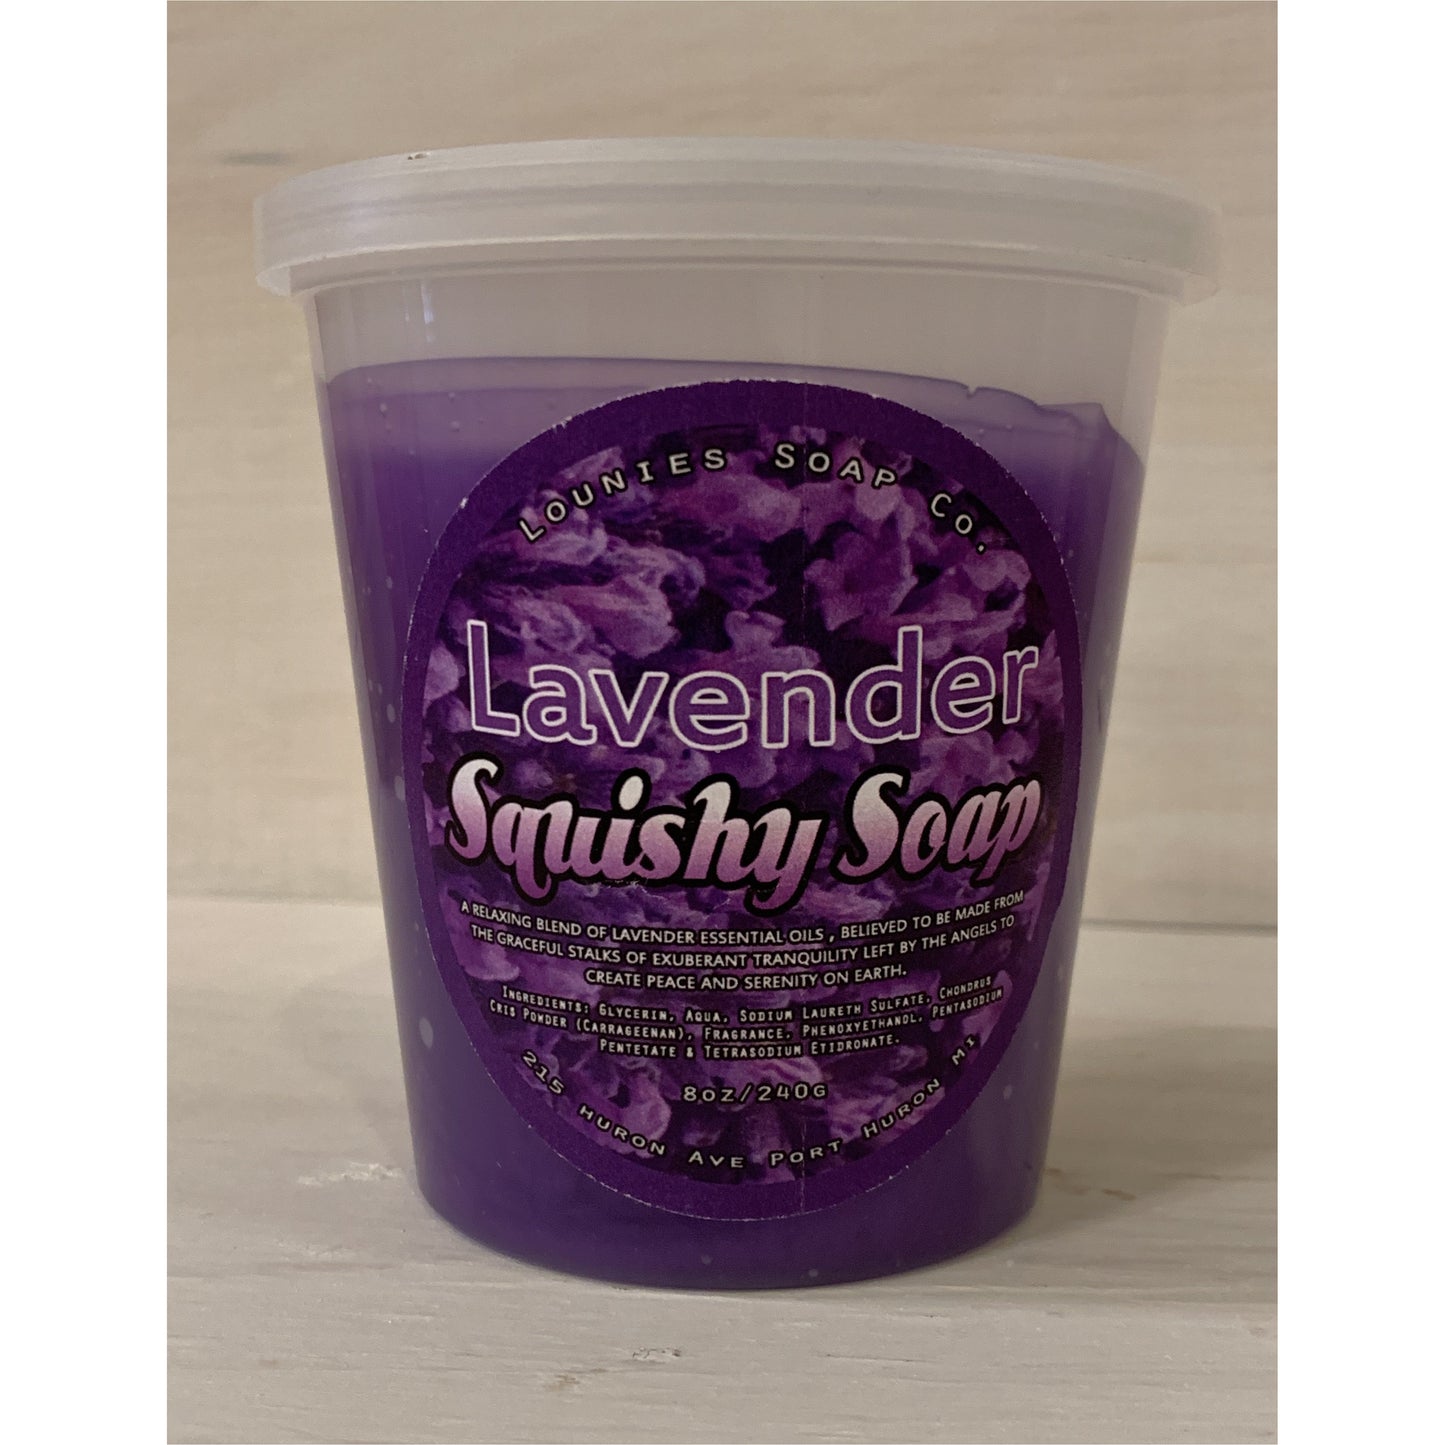 Lavender Squishy Soap